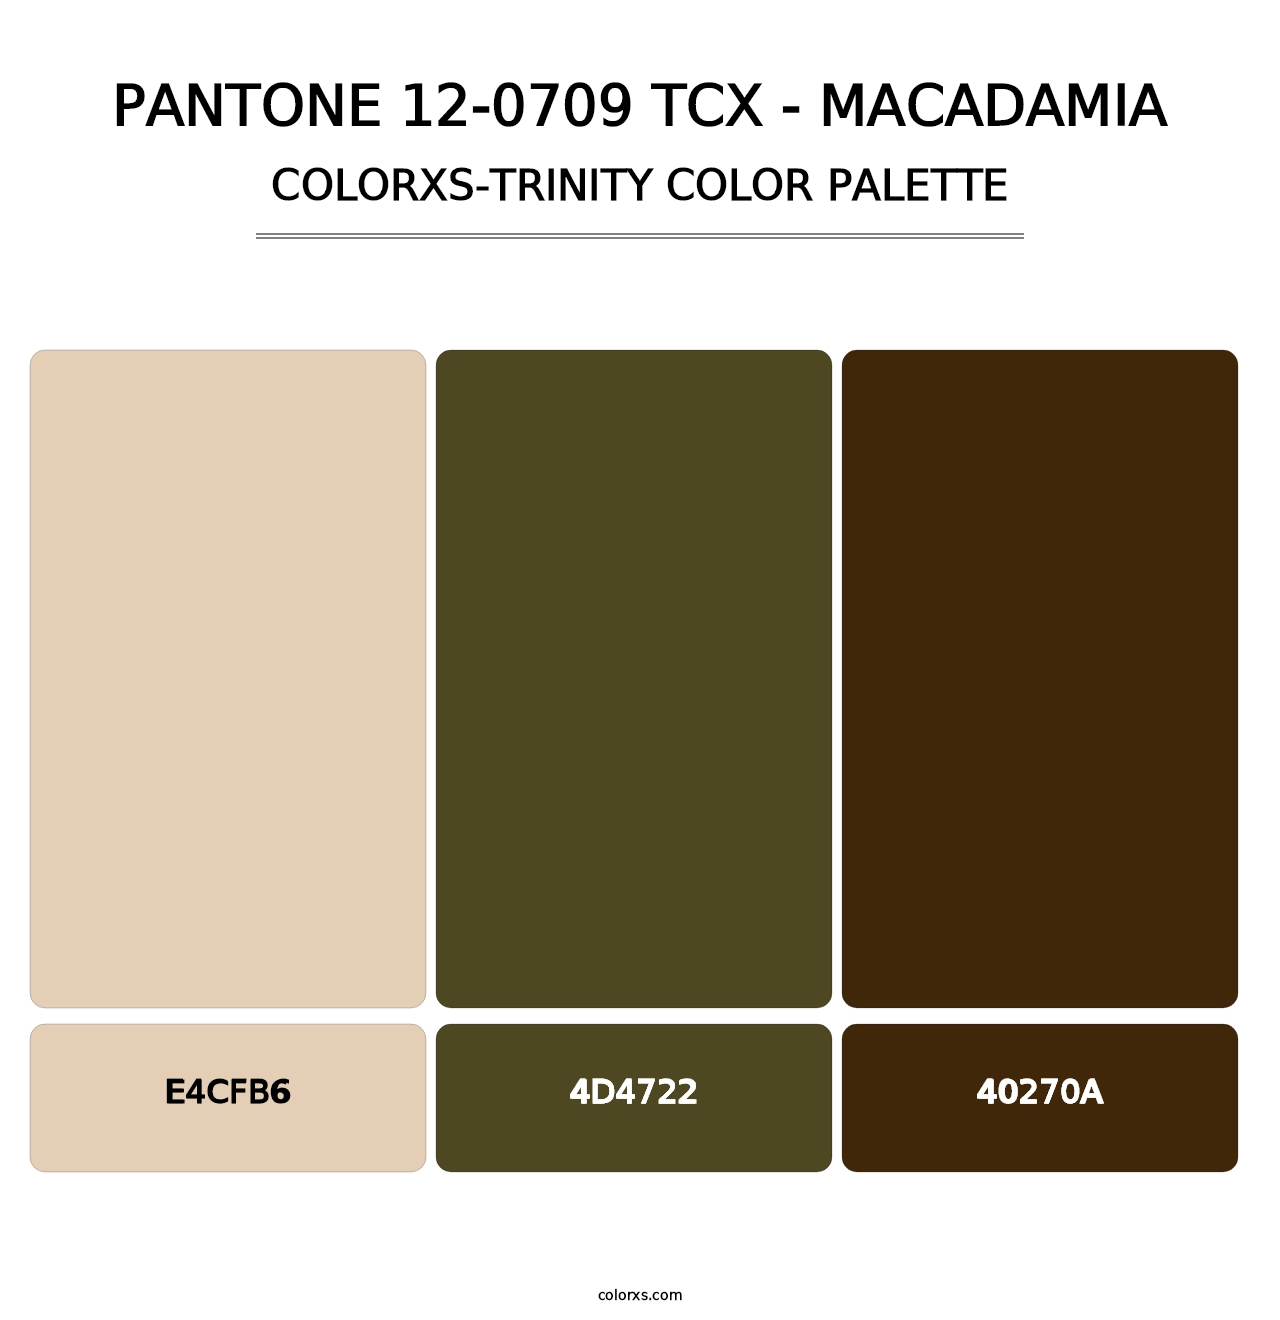 PANTONE 12-0709 TCX - Macadamia - Colorxs Trinity Palette